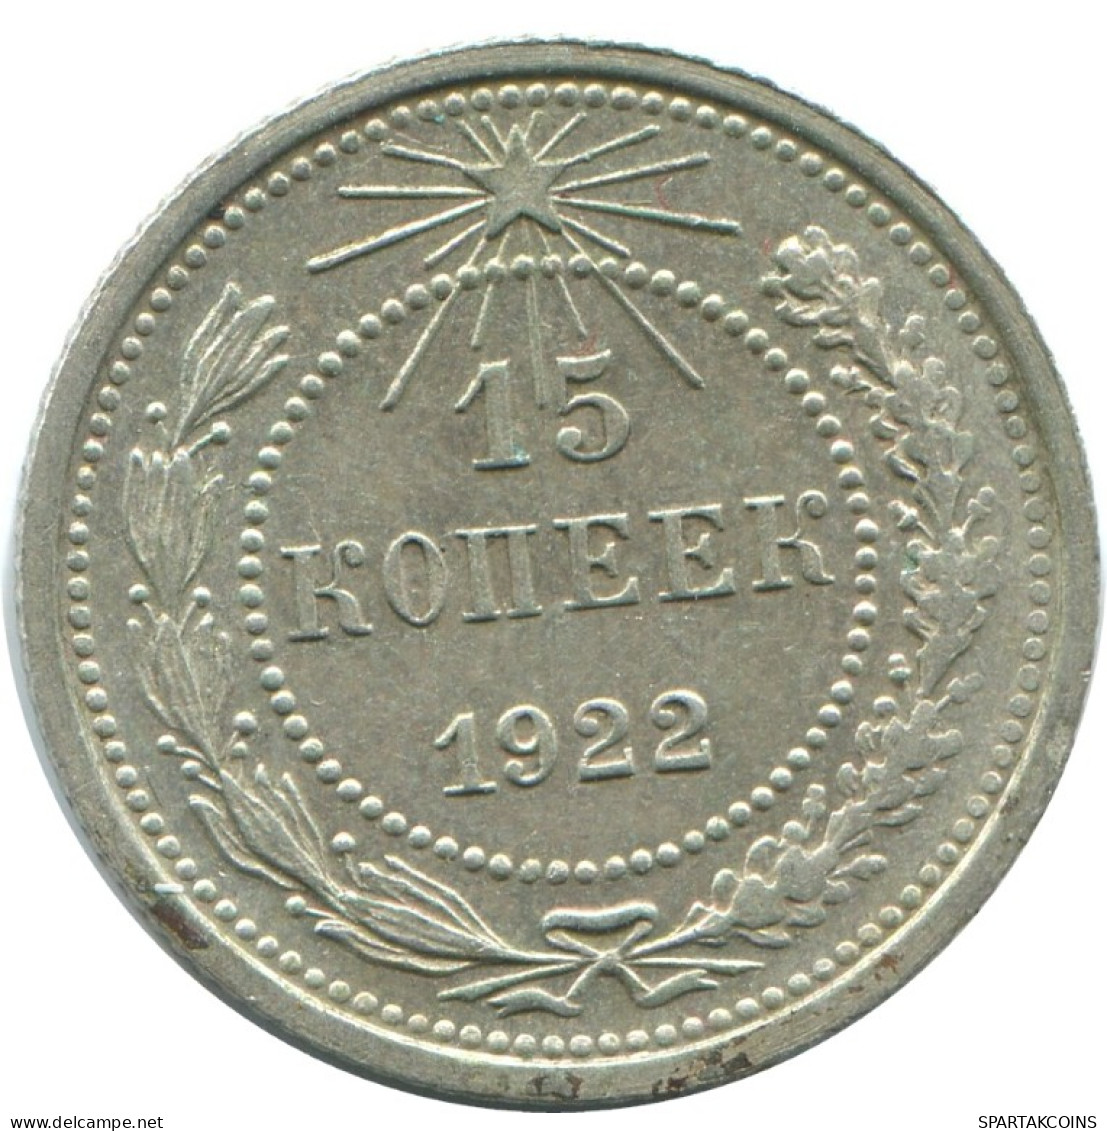 15 KOPEKS 1922 RUSSIA RSFSR SILVER Coin HIGH GRADE #AF204.4.U.A - Russie